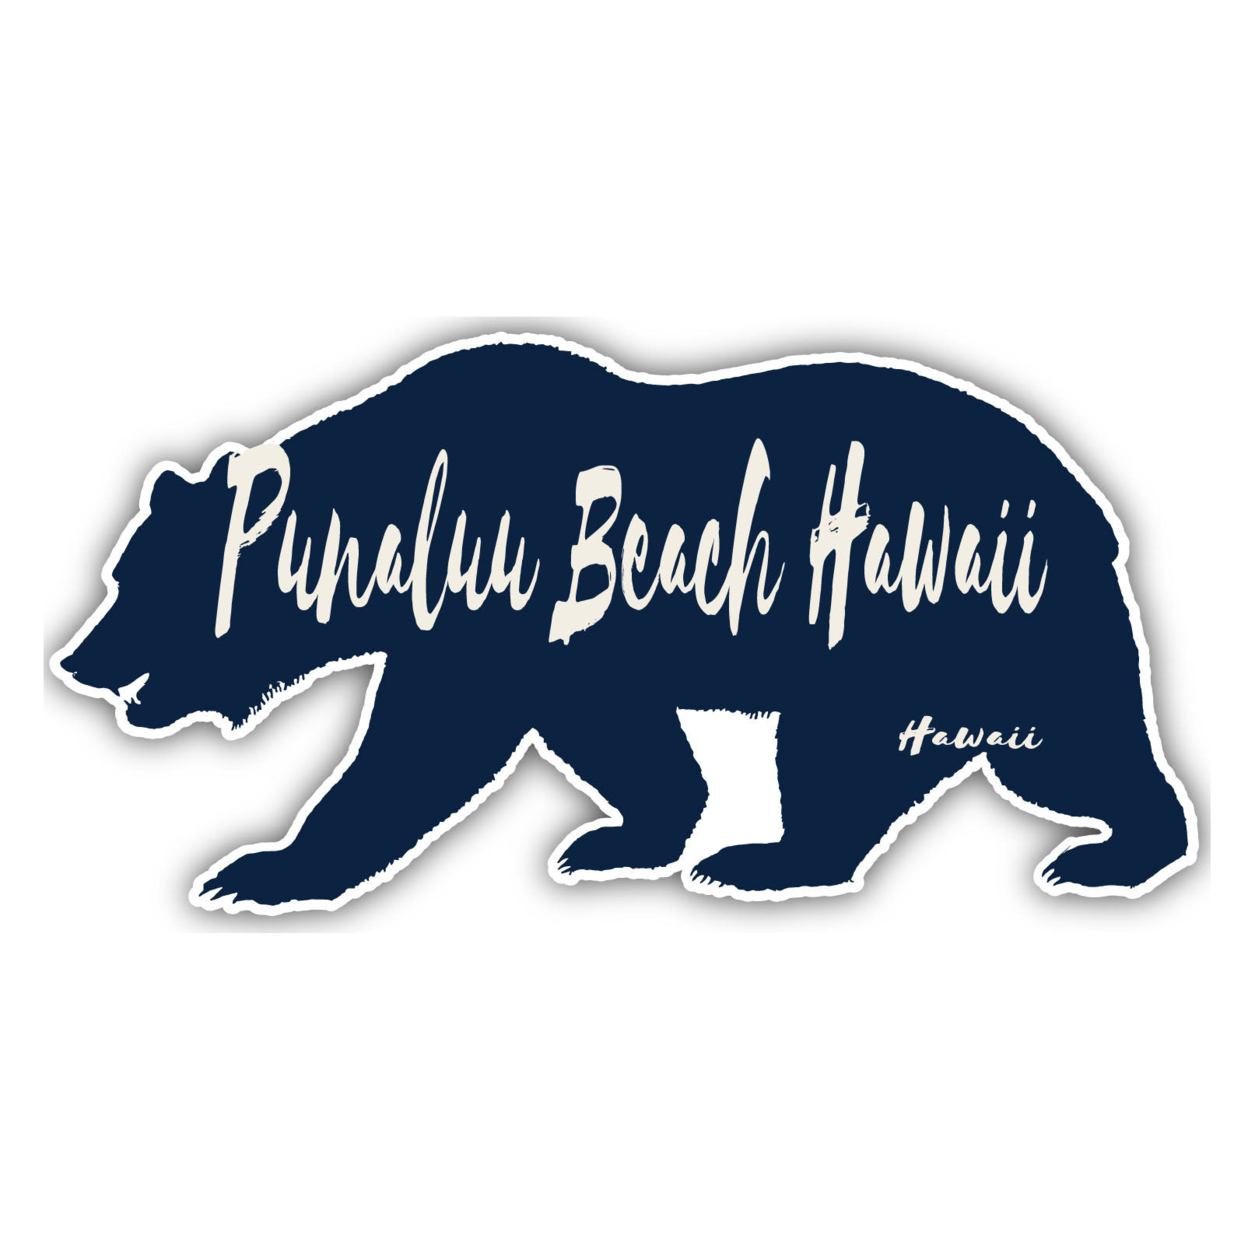 Punaluu Beach Hawaii Souvenir Decorative Stickers (Choose Theme And Size) - Single Unit, 4-Inch, Bear